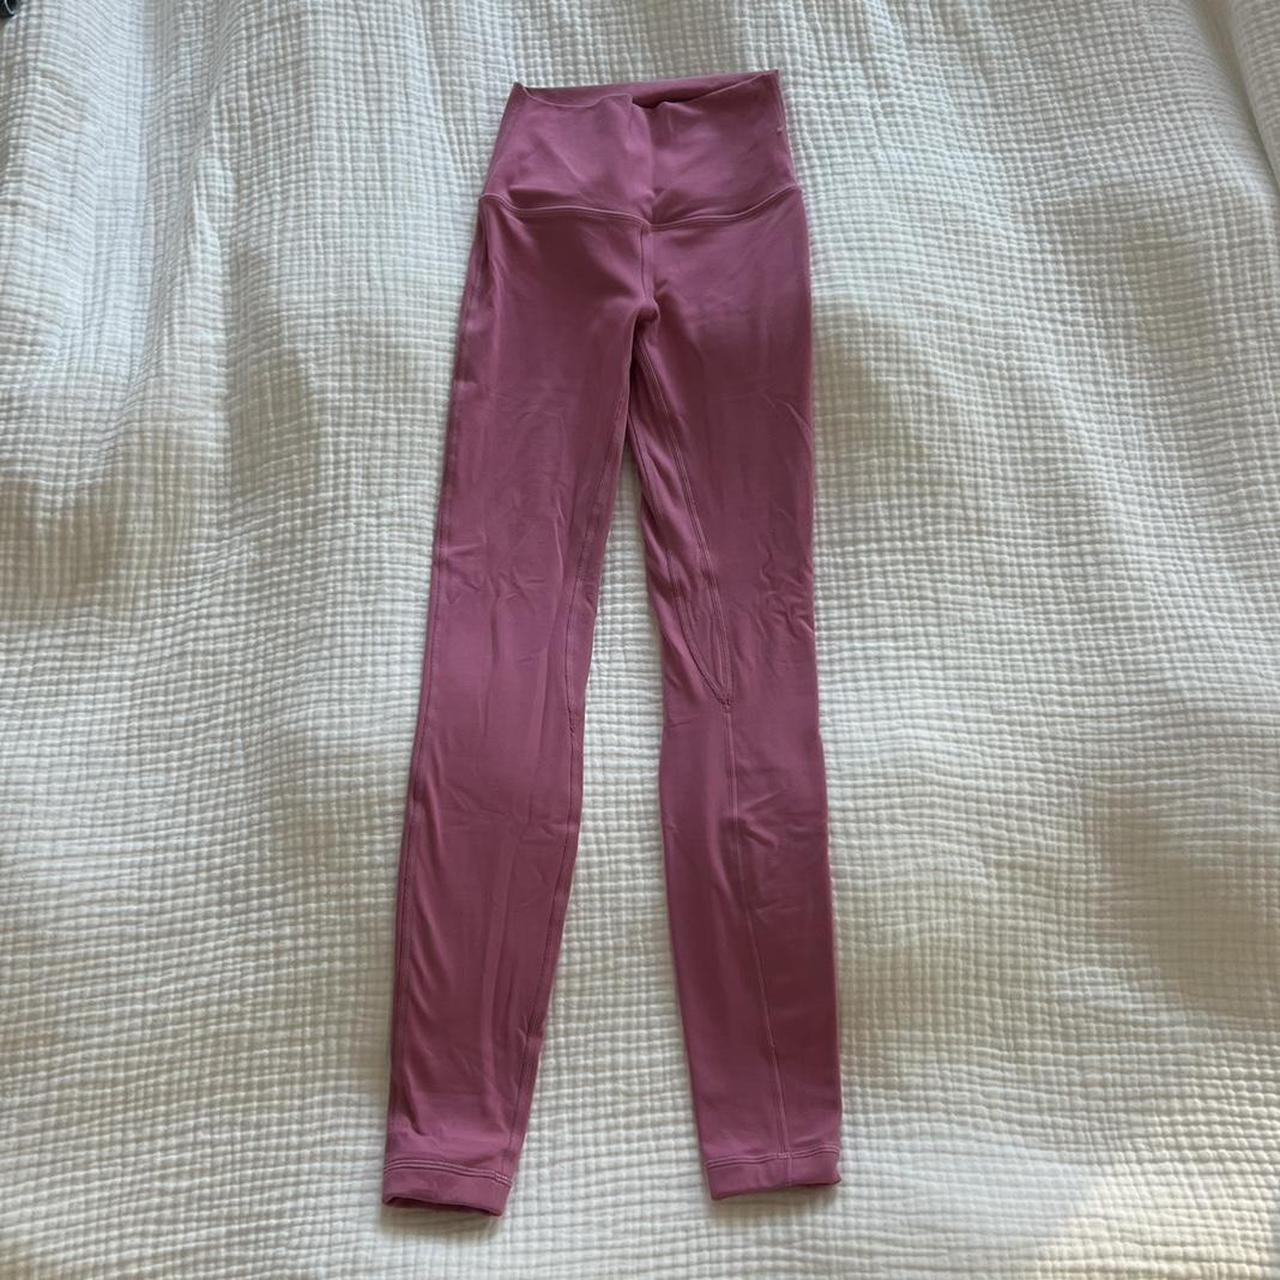 LULULEMON - bubblegum pink align leggings - barely... - Depop